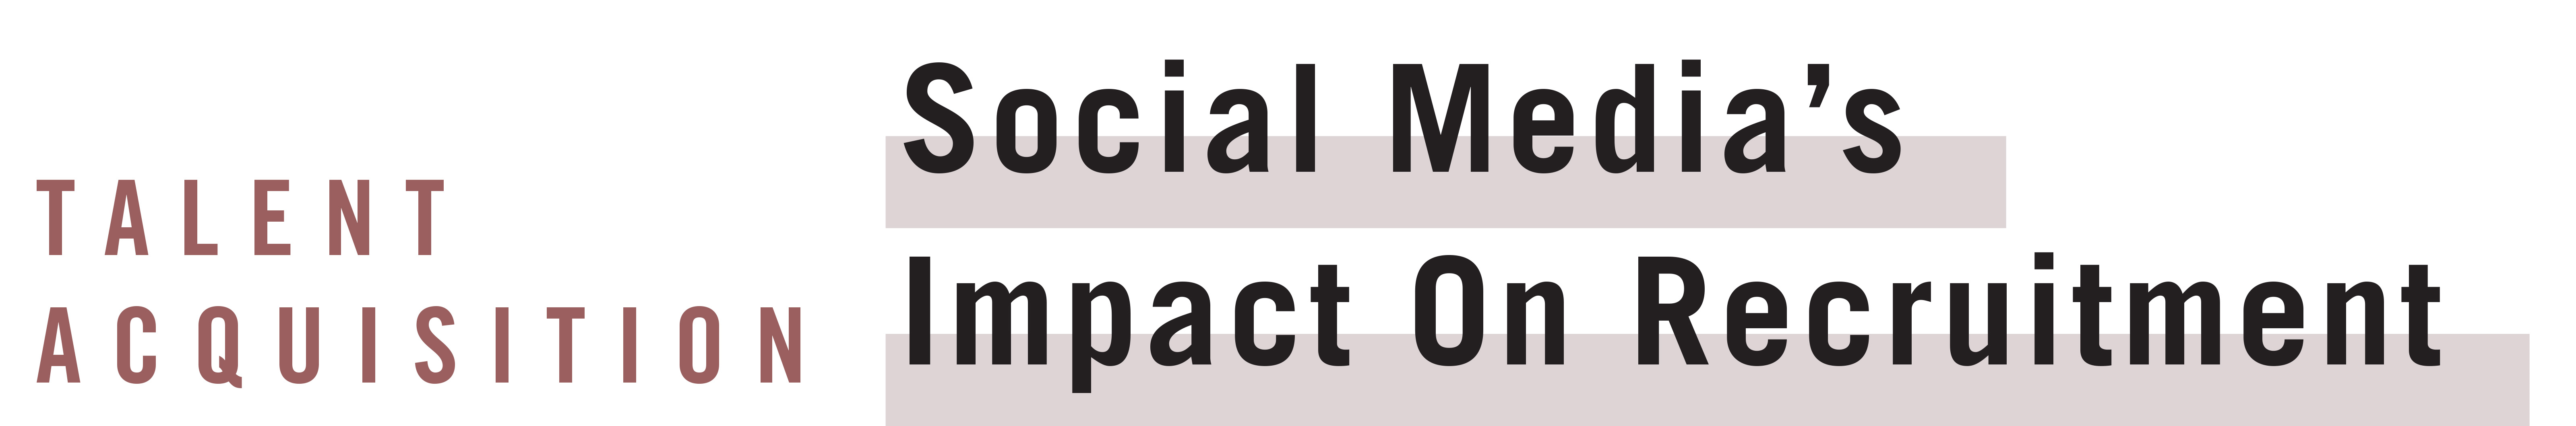 Social Media Recruitment Impact